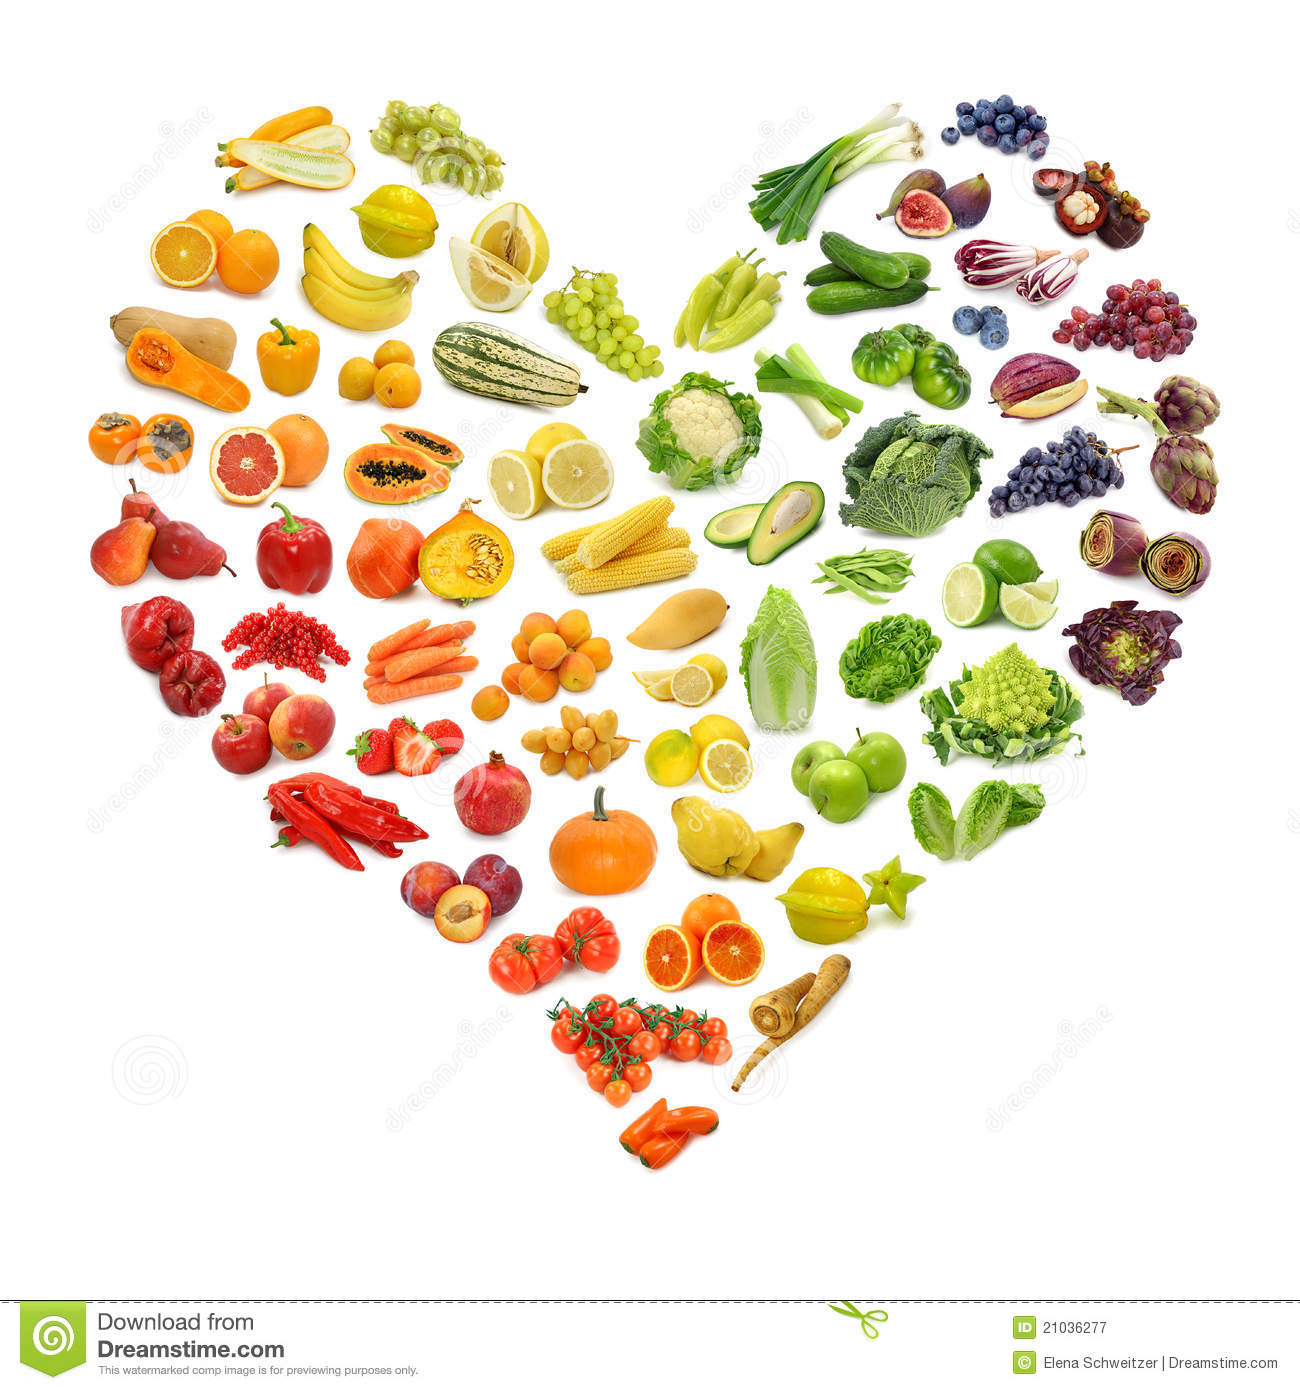 heart fruits vegetables 21036277 1